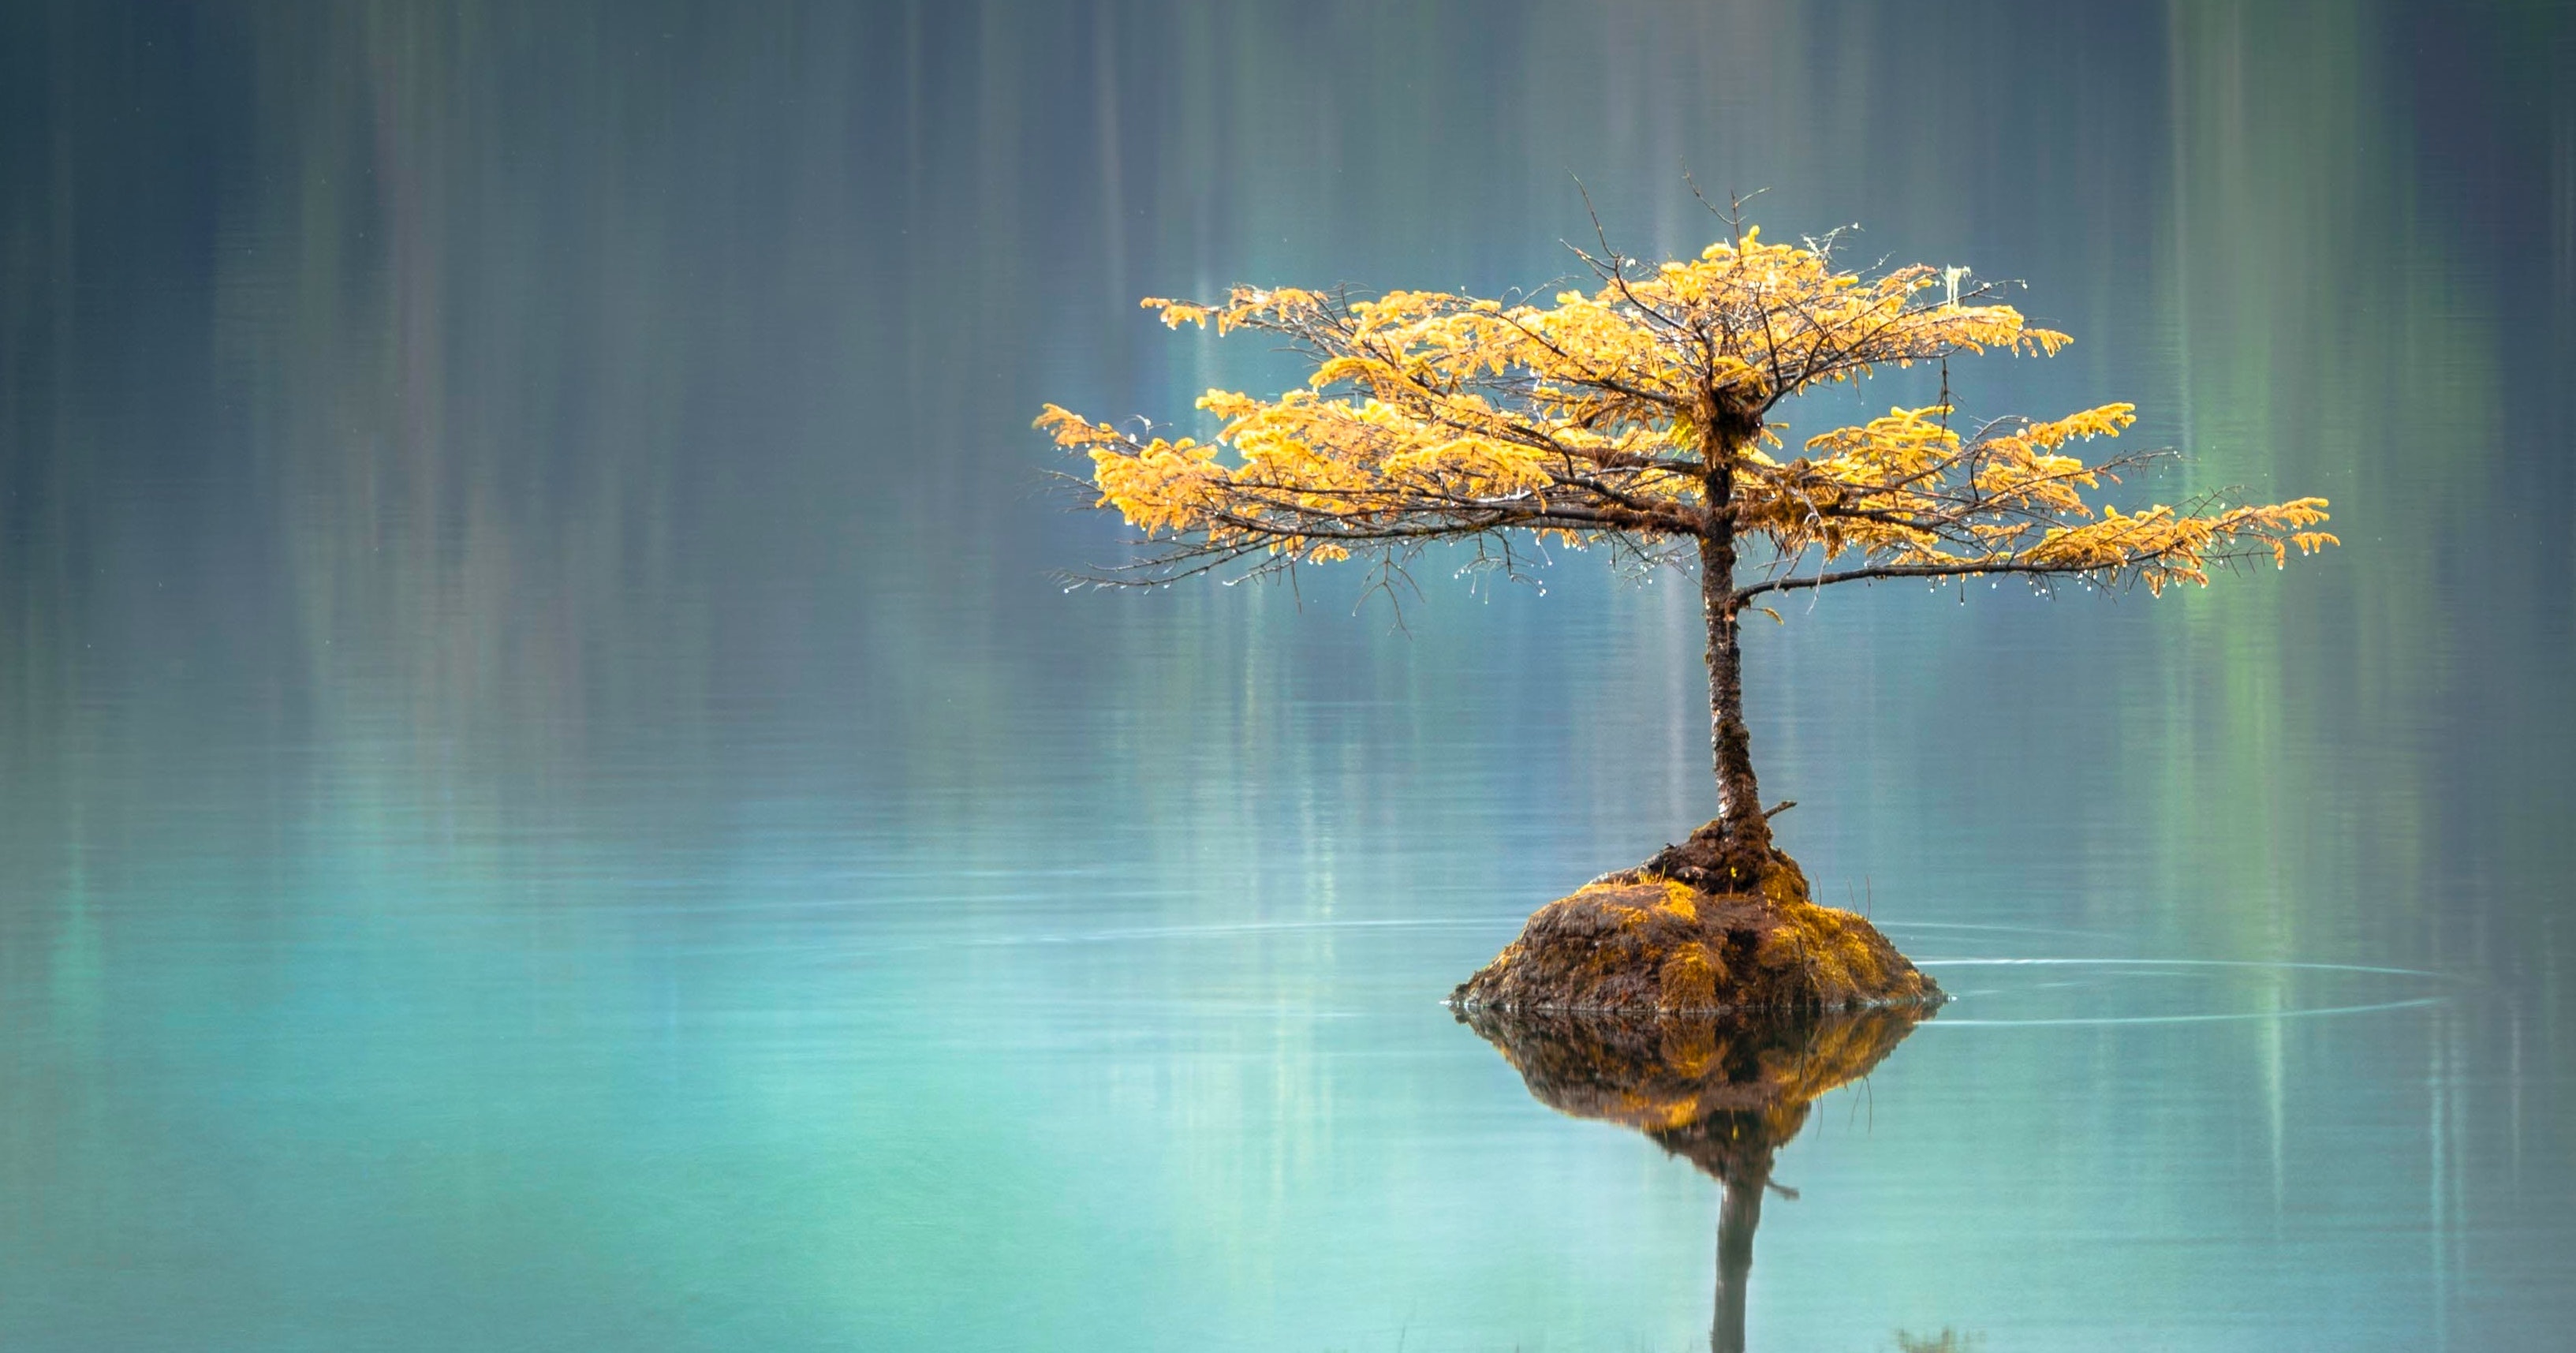 A bonsai tree in a pond